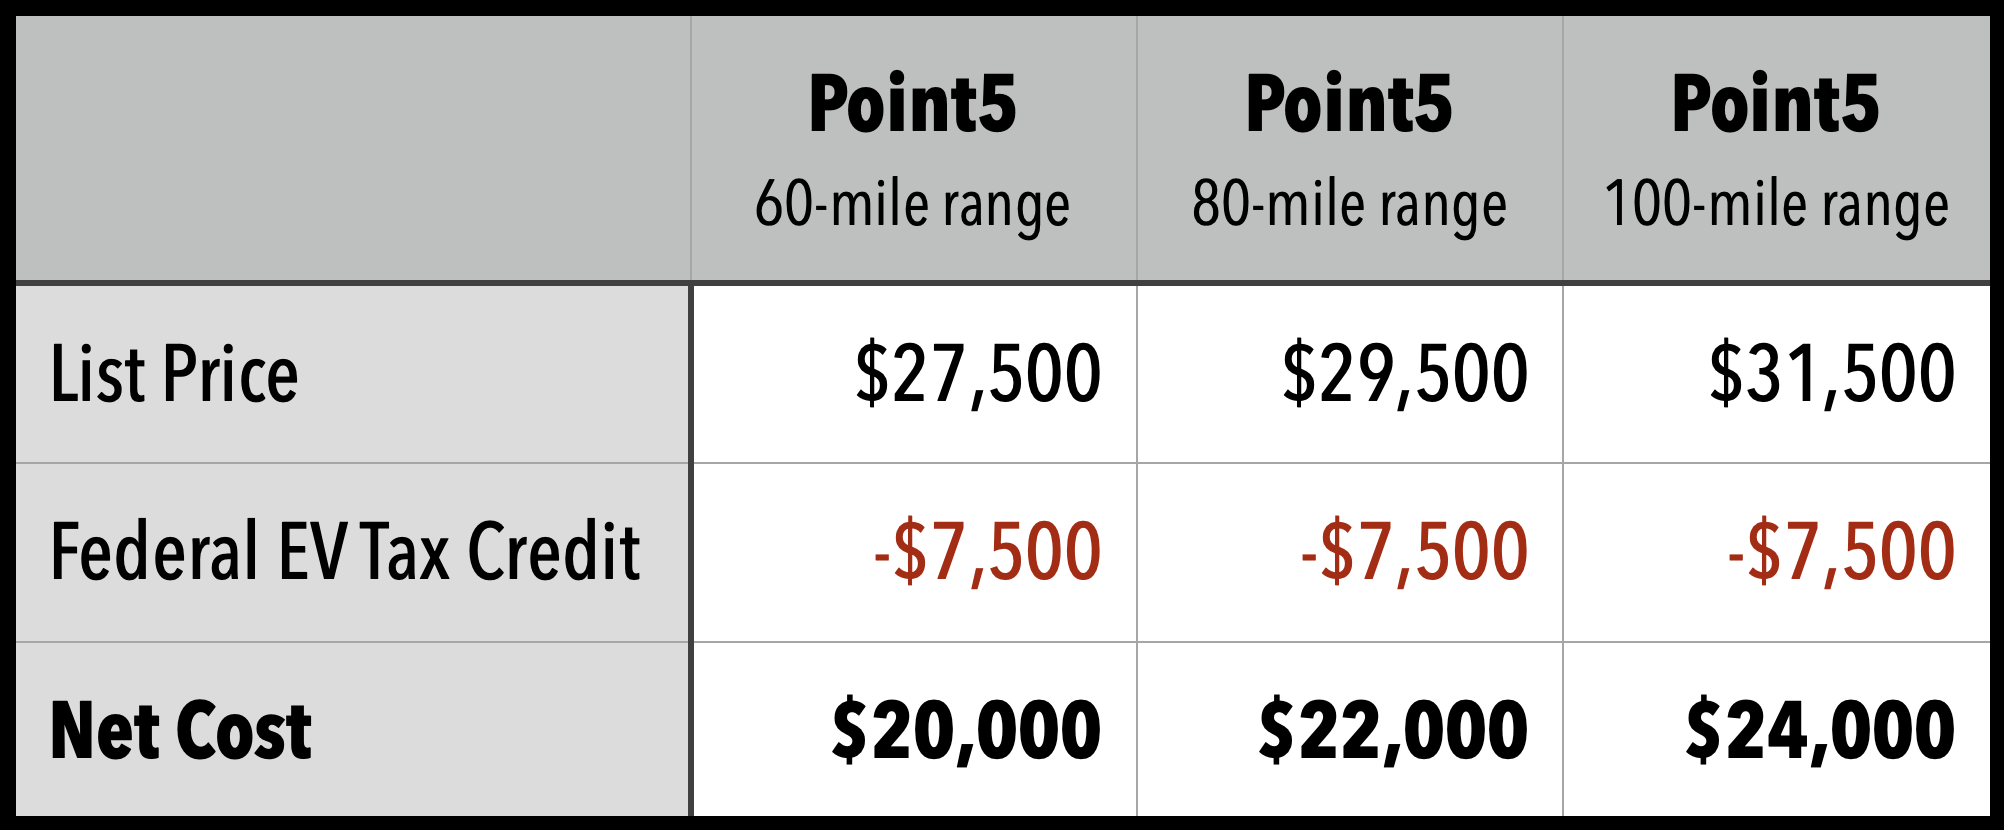 Price and Range